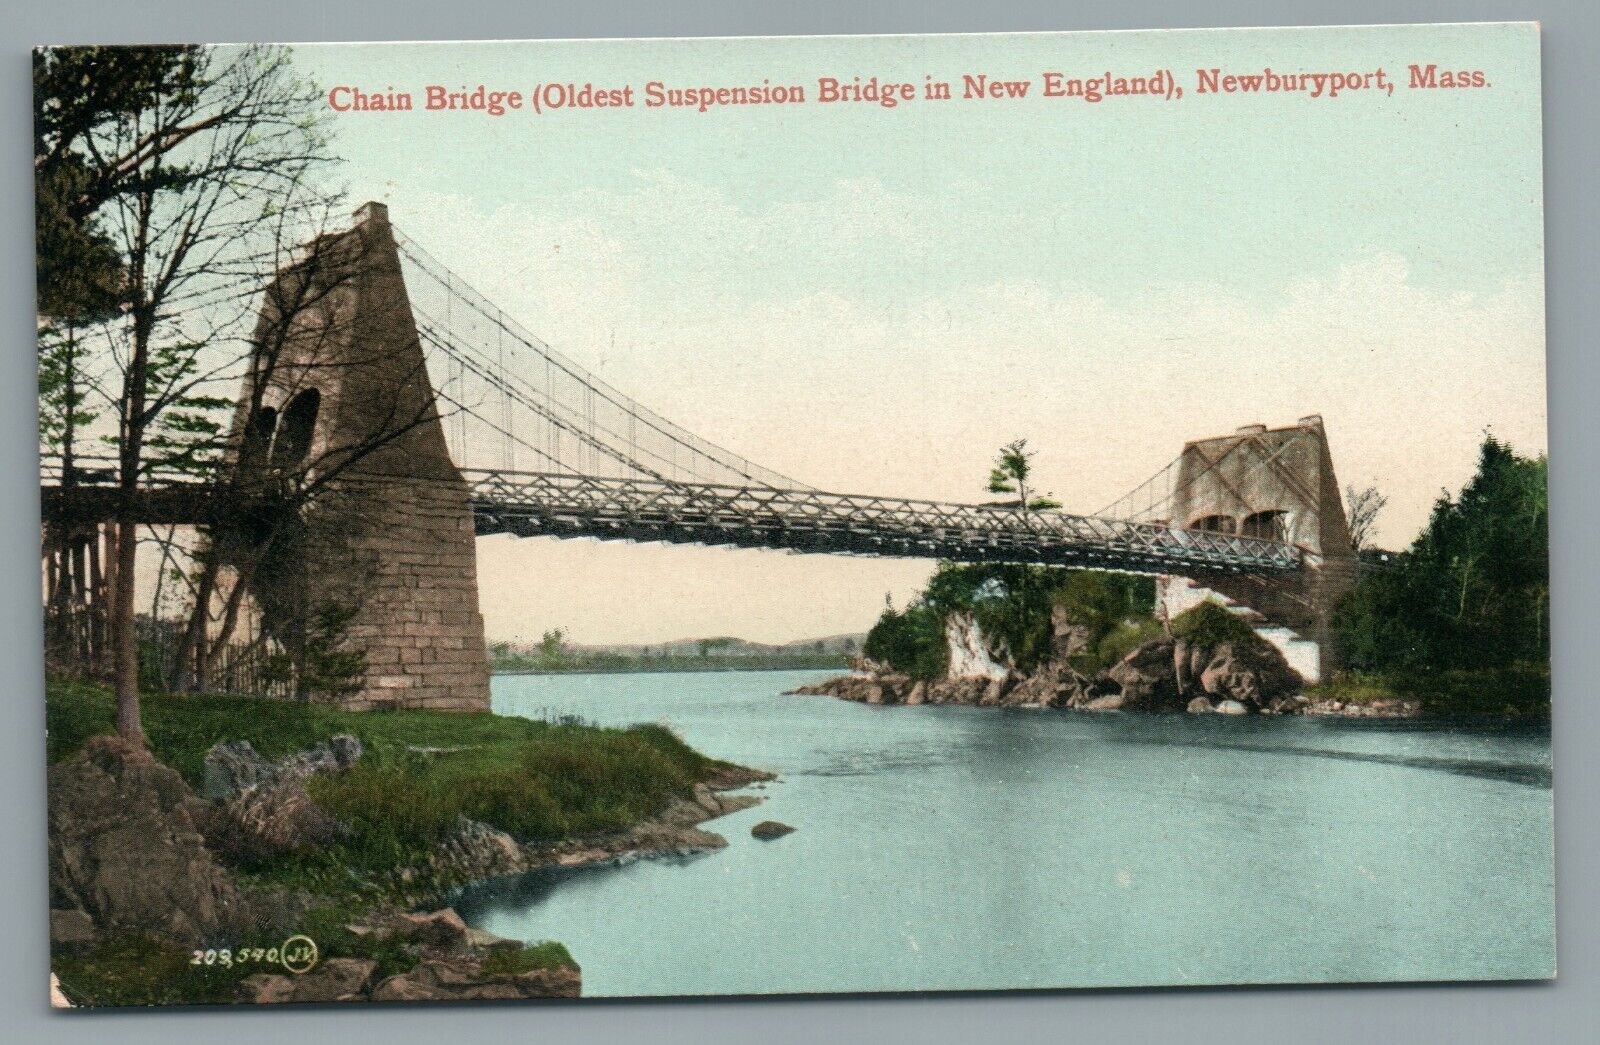 Newburyport Mass. Chain Bridge Oldest Suspension Bridge in New England Postcard